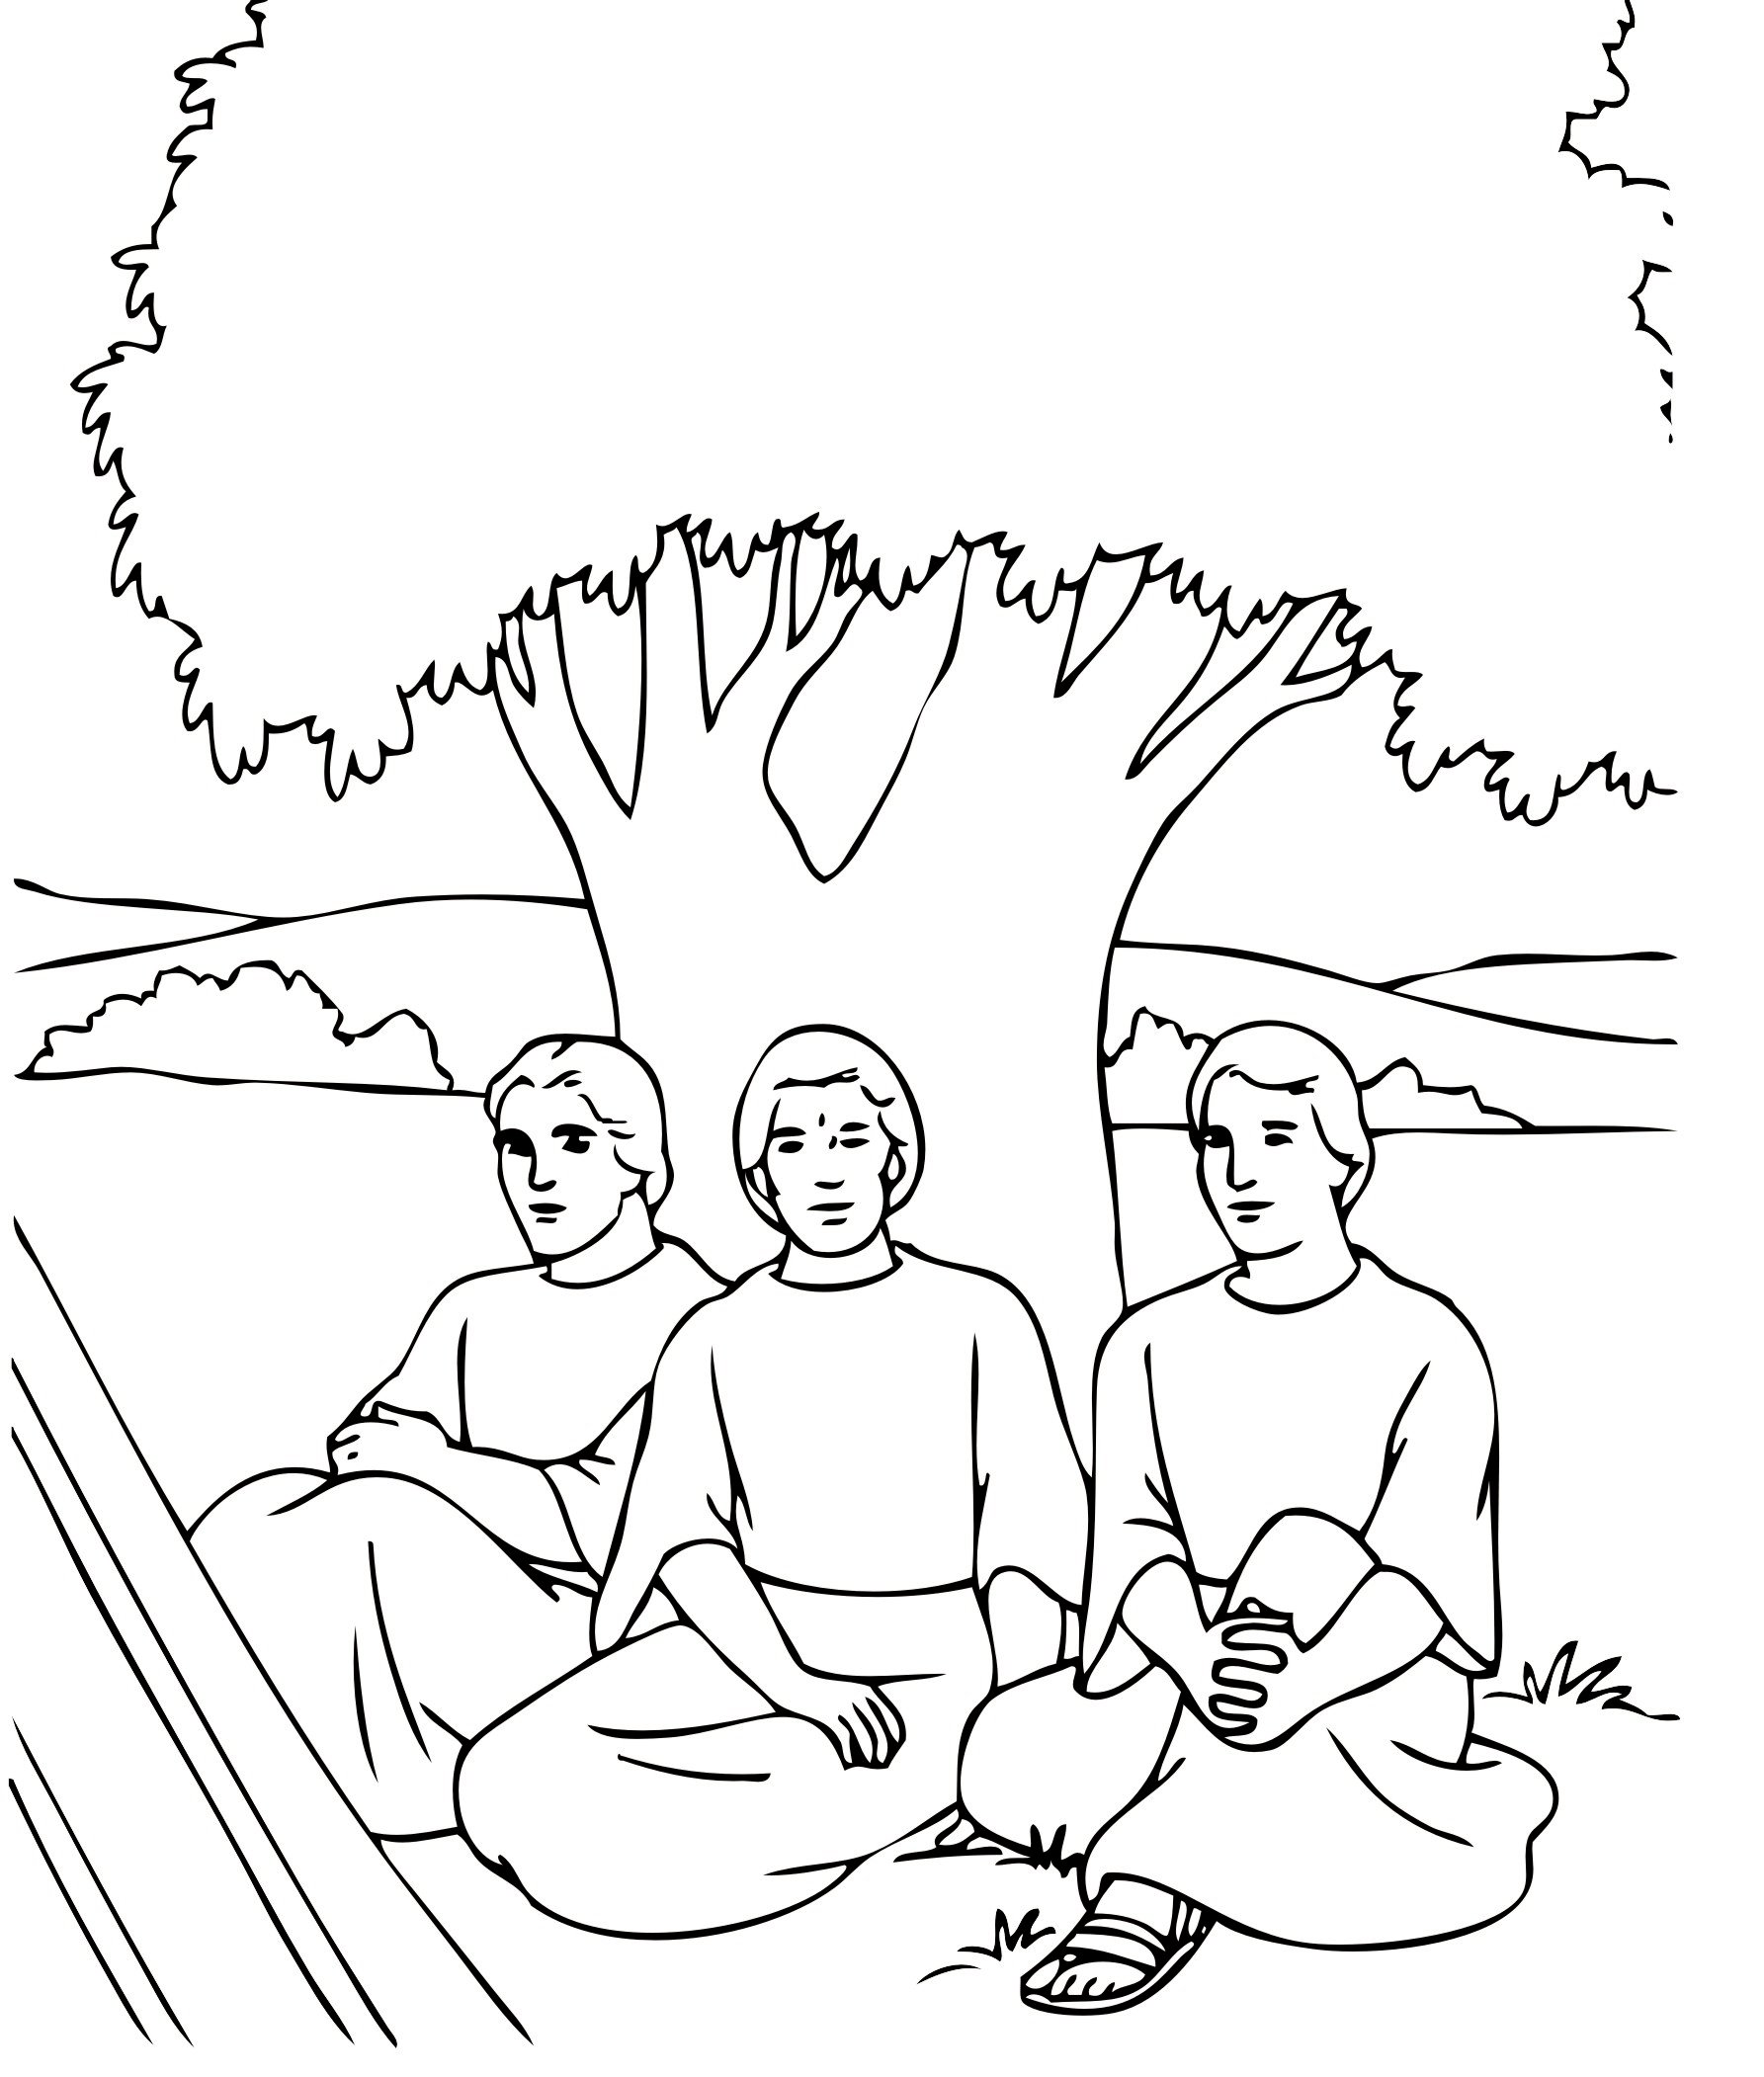 Рисунок на тему троица легко